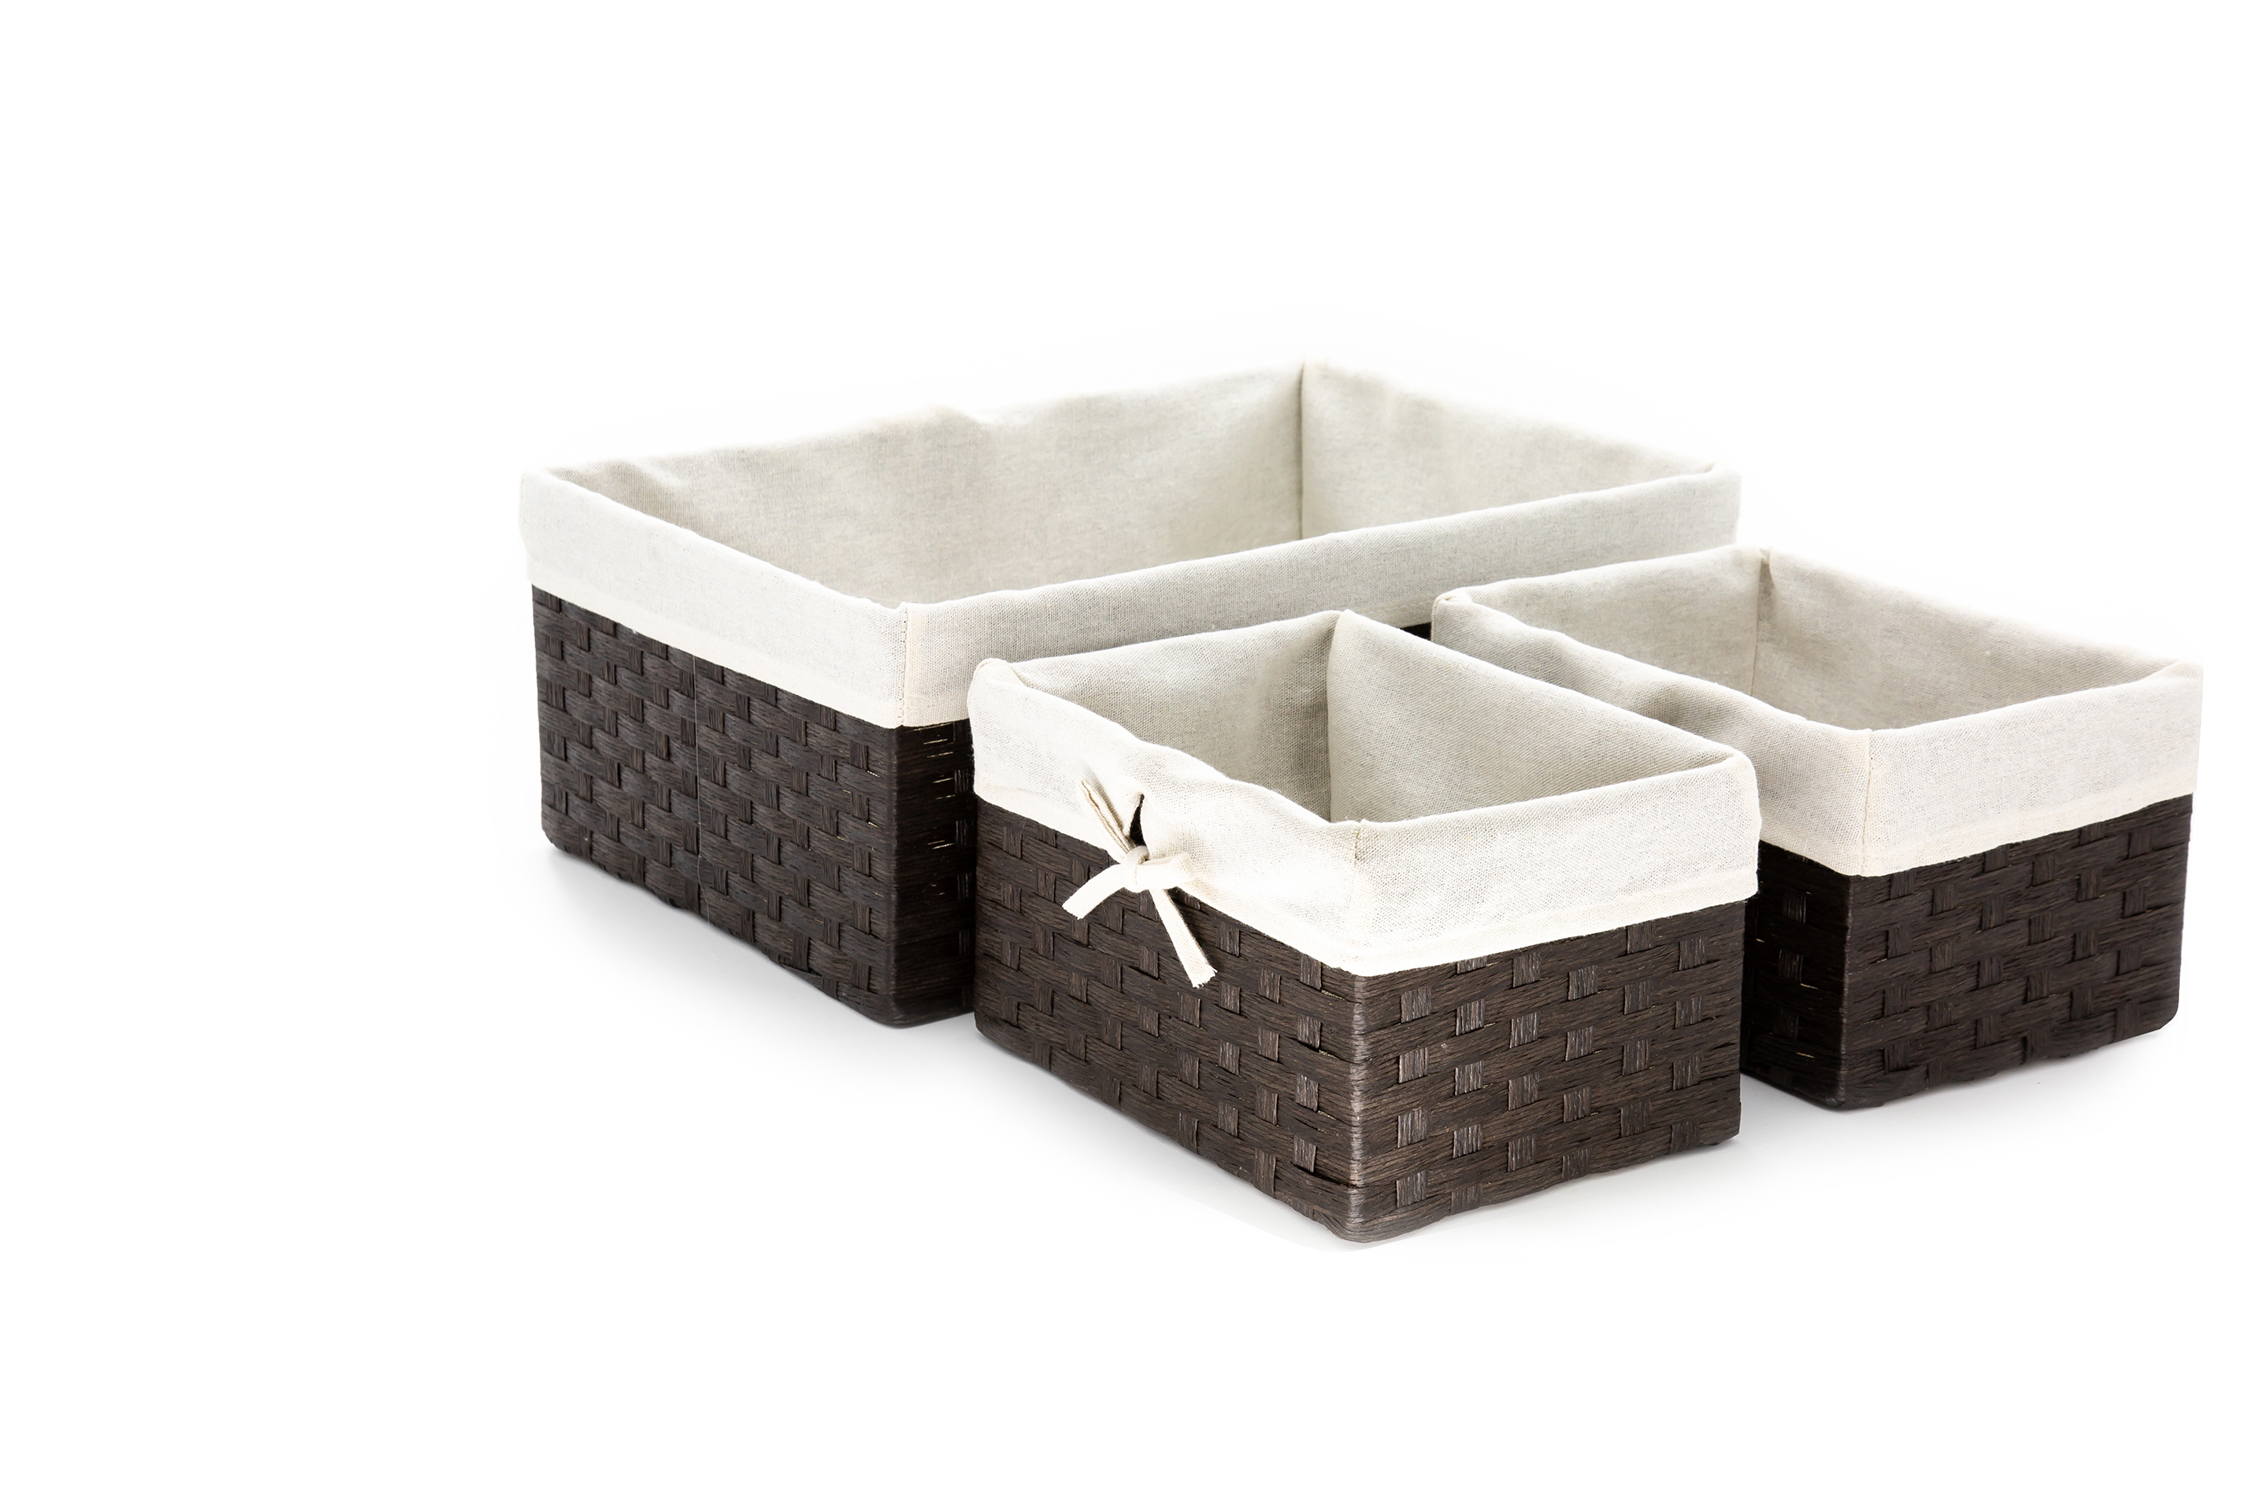 Small Wicker Basket Set – Brown Paper Thrift